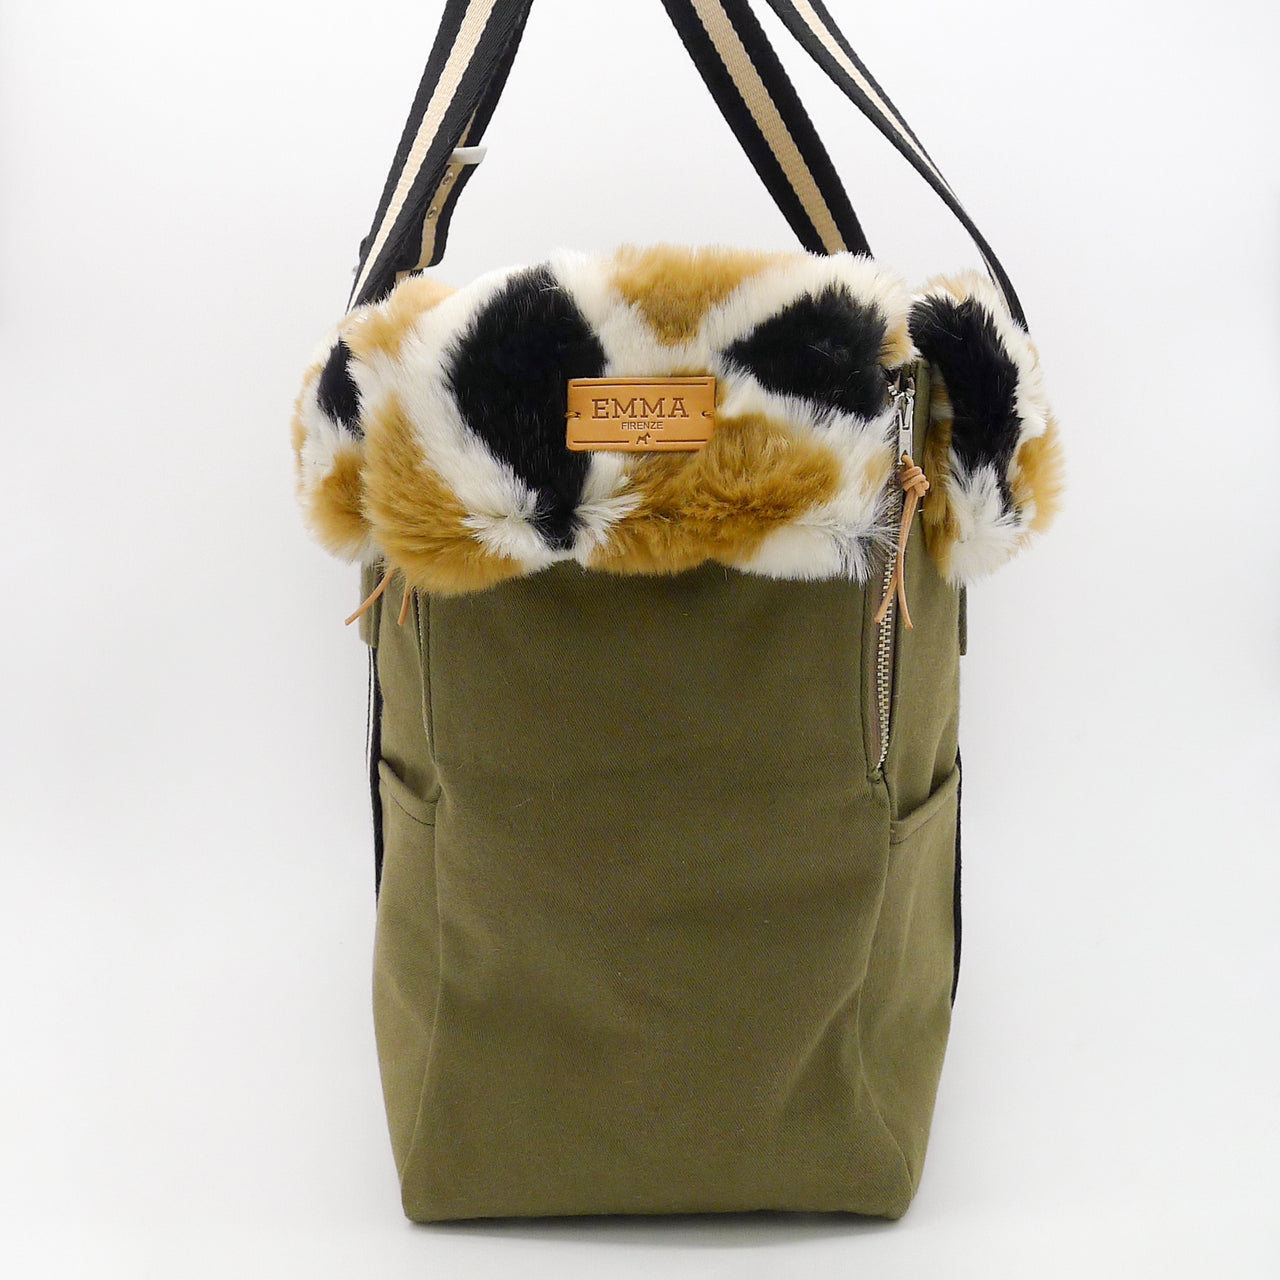 Dachshund Dog Carrier Bag with Fur